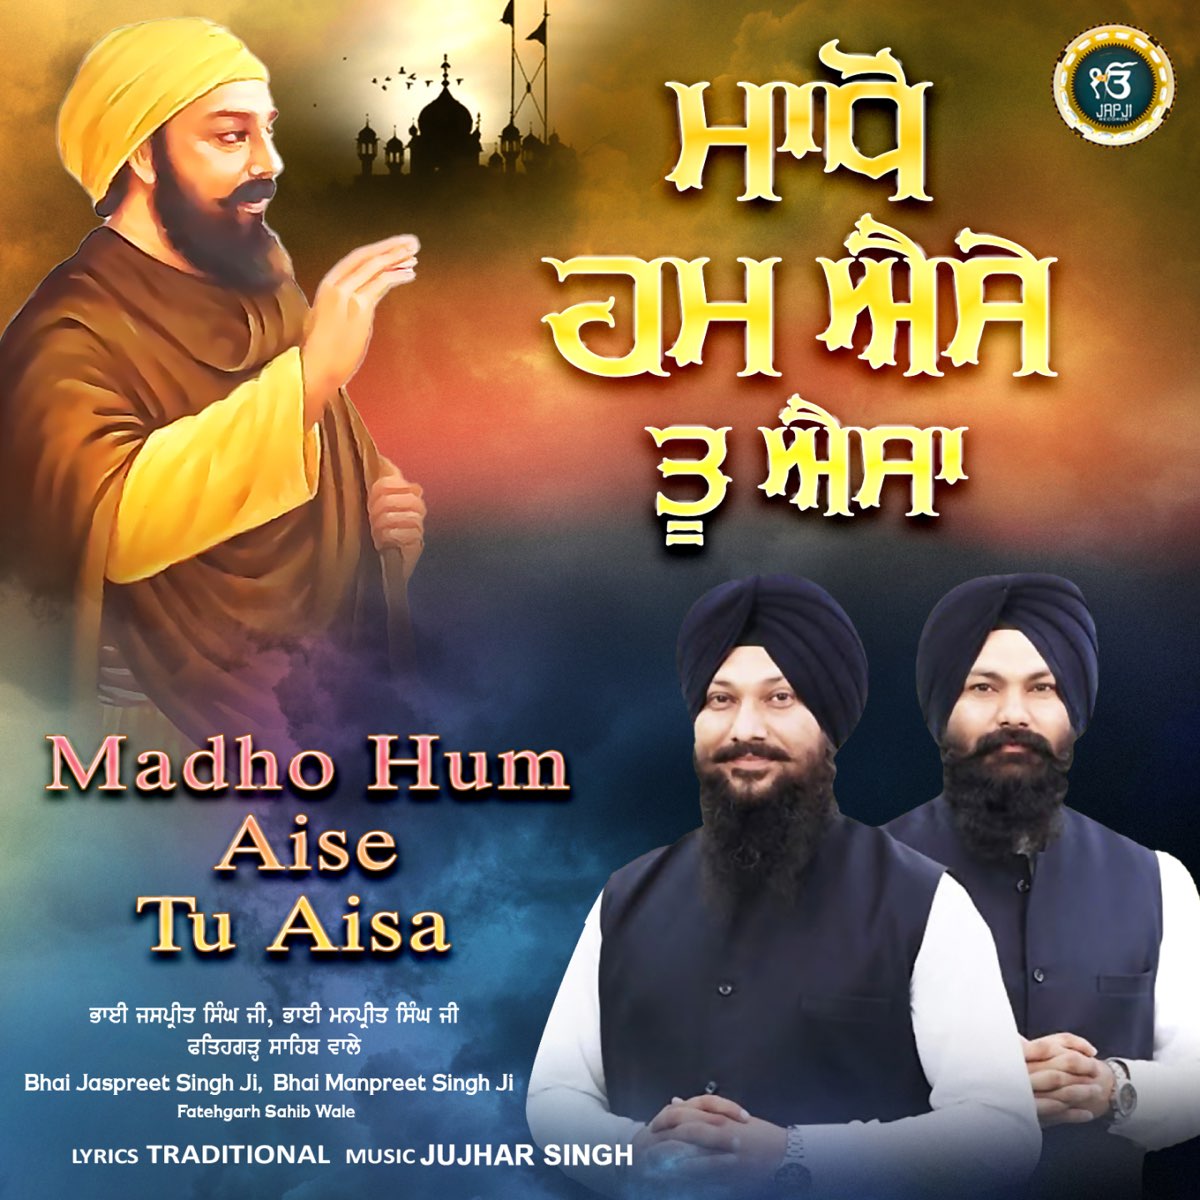 Madho Hum Aise Tu Aaisa - Single - Album by Bhai Jaspreet Singh Fatehgarh  Sahib Wale & Bhai Manpreet Singh Ji Fatehgarh Sahib Wale - Apple Music